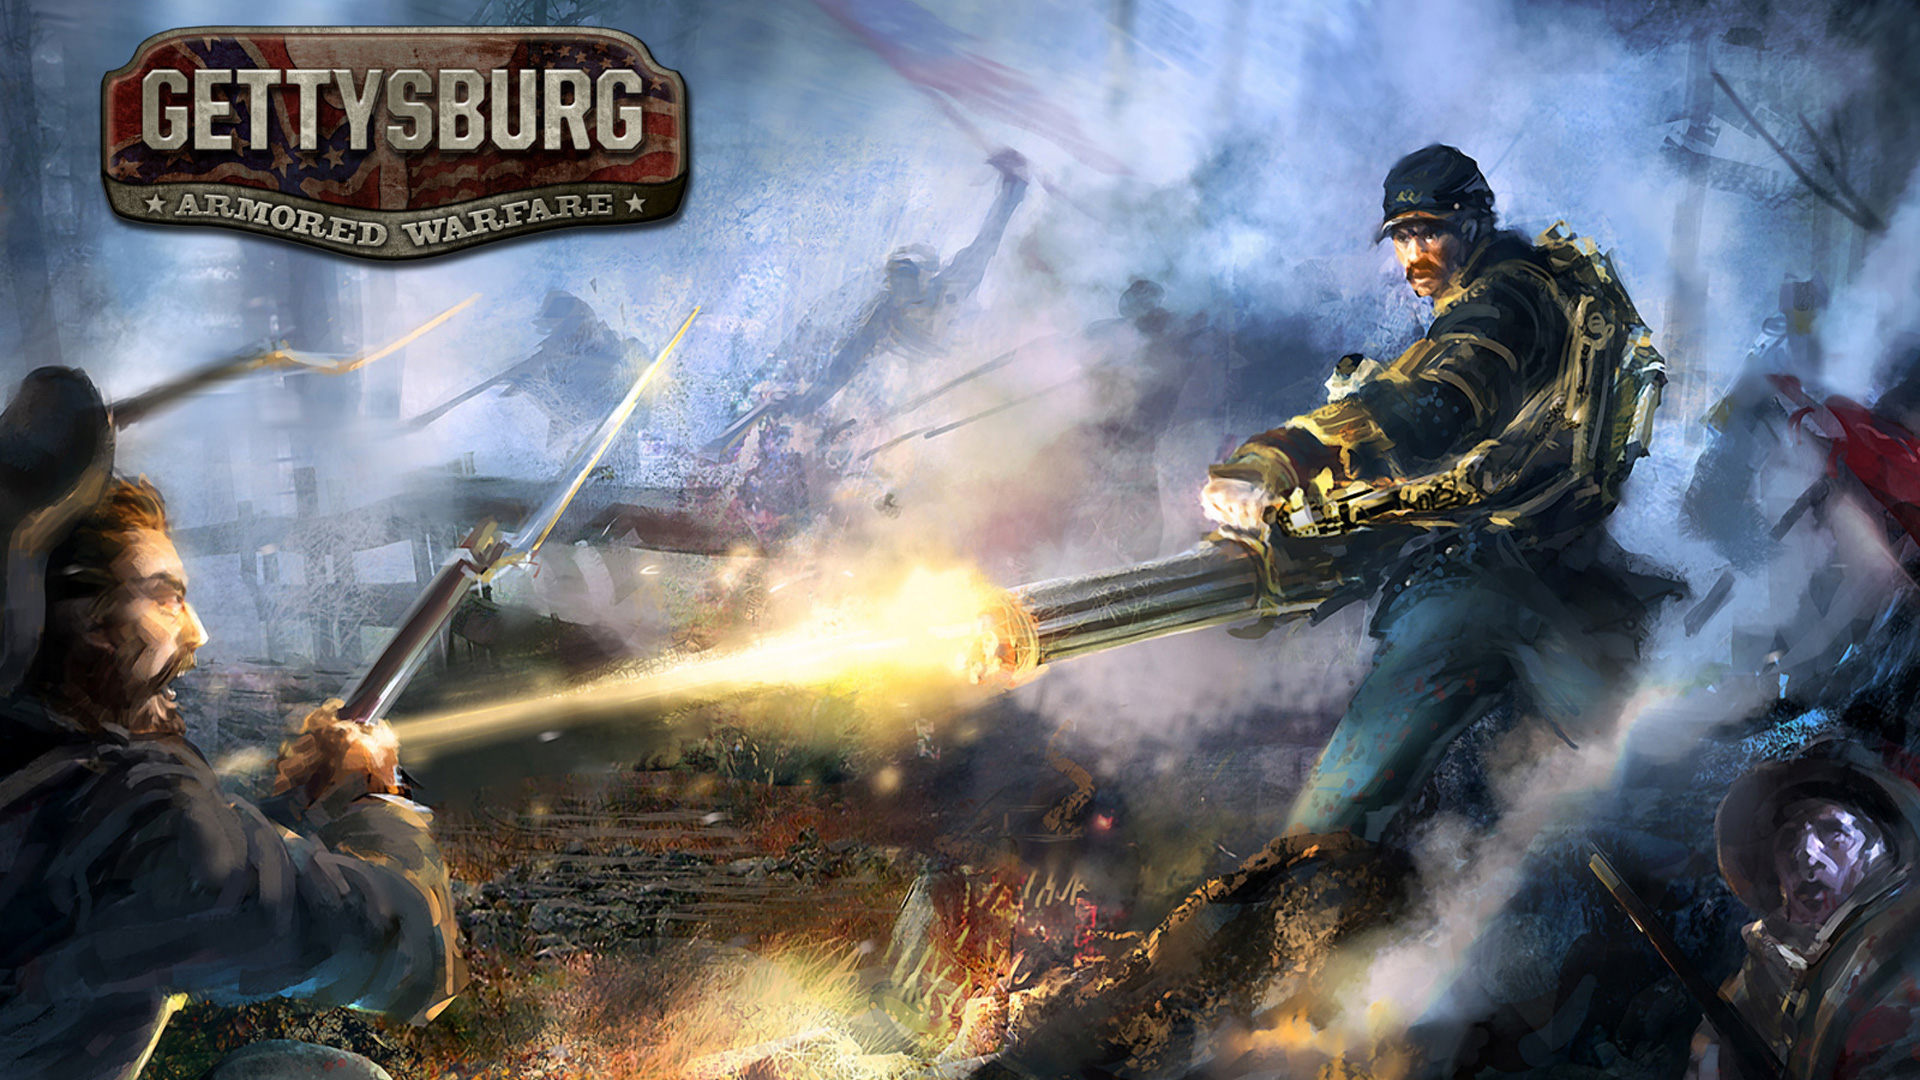 Gettysburg Armored Warfare HD Wallpaper Background Image